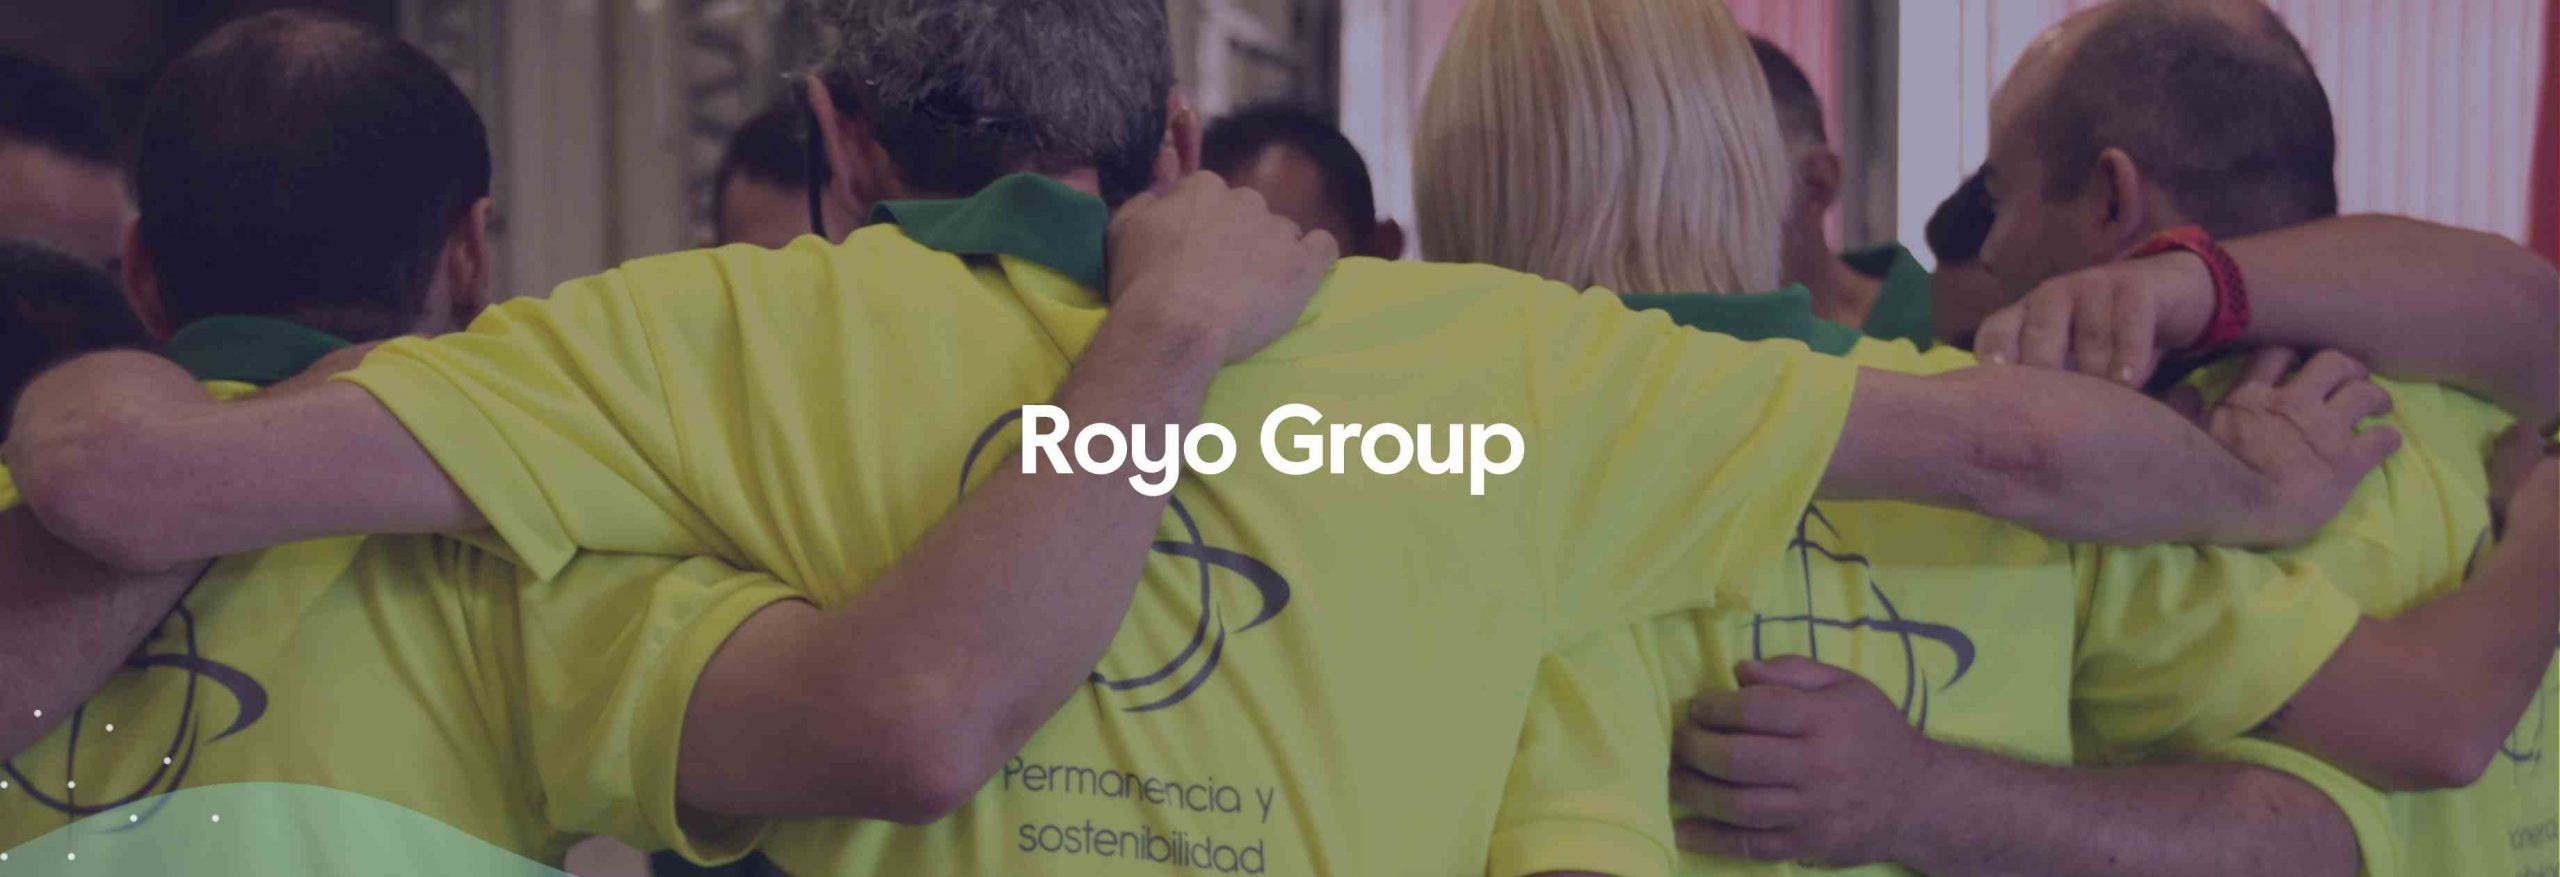 royo group